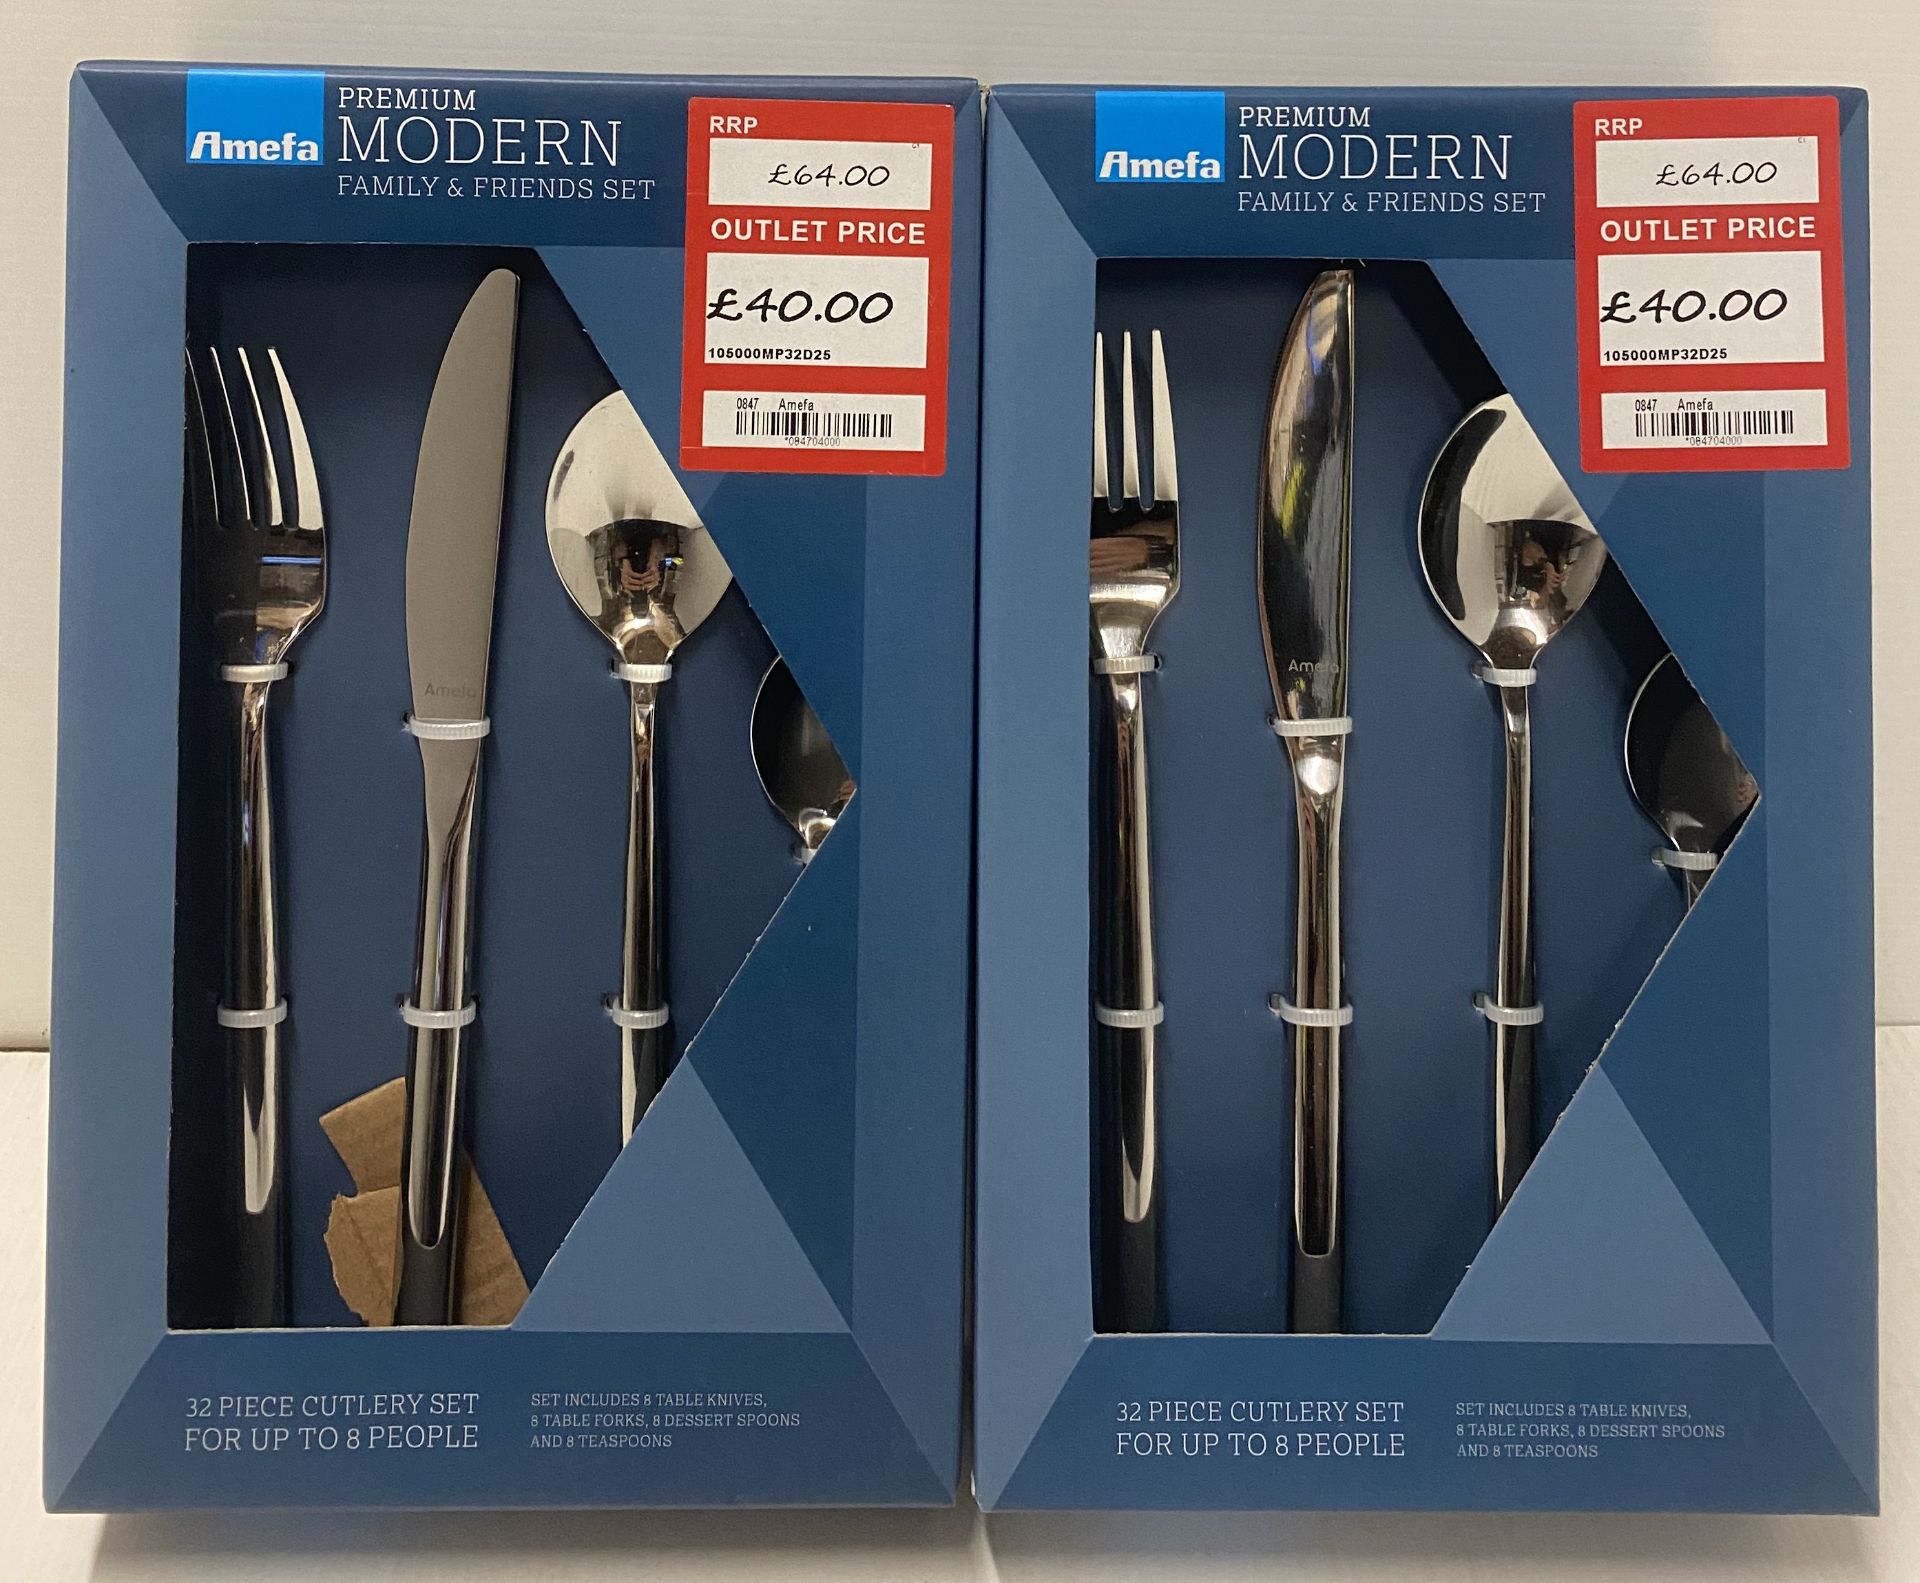 2 x Amefa Premium Modern 32 piece Carlton cutlery family and friends sets RRP £64.